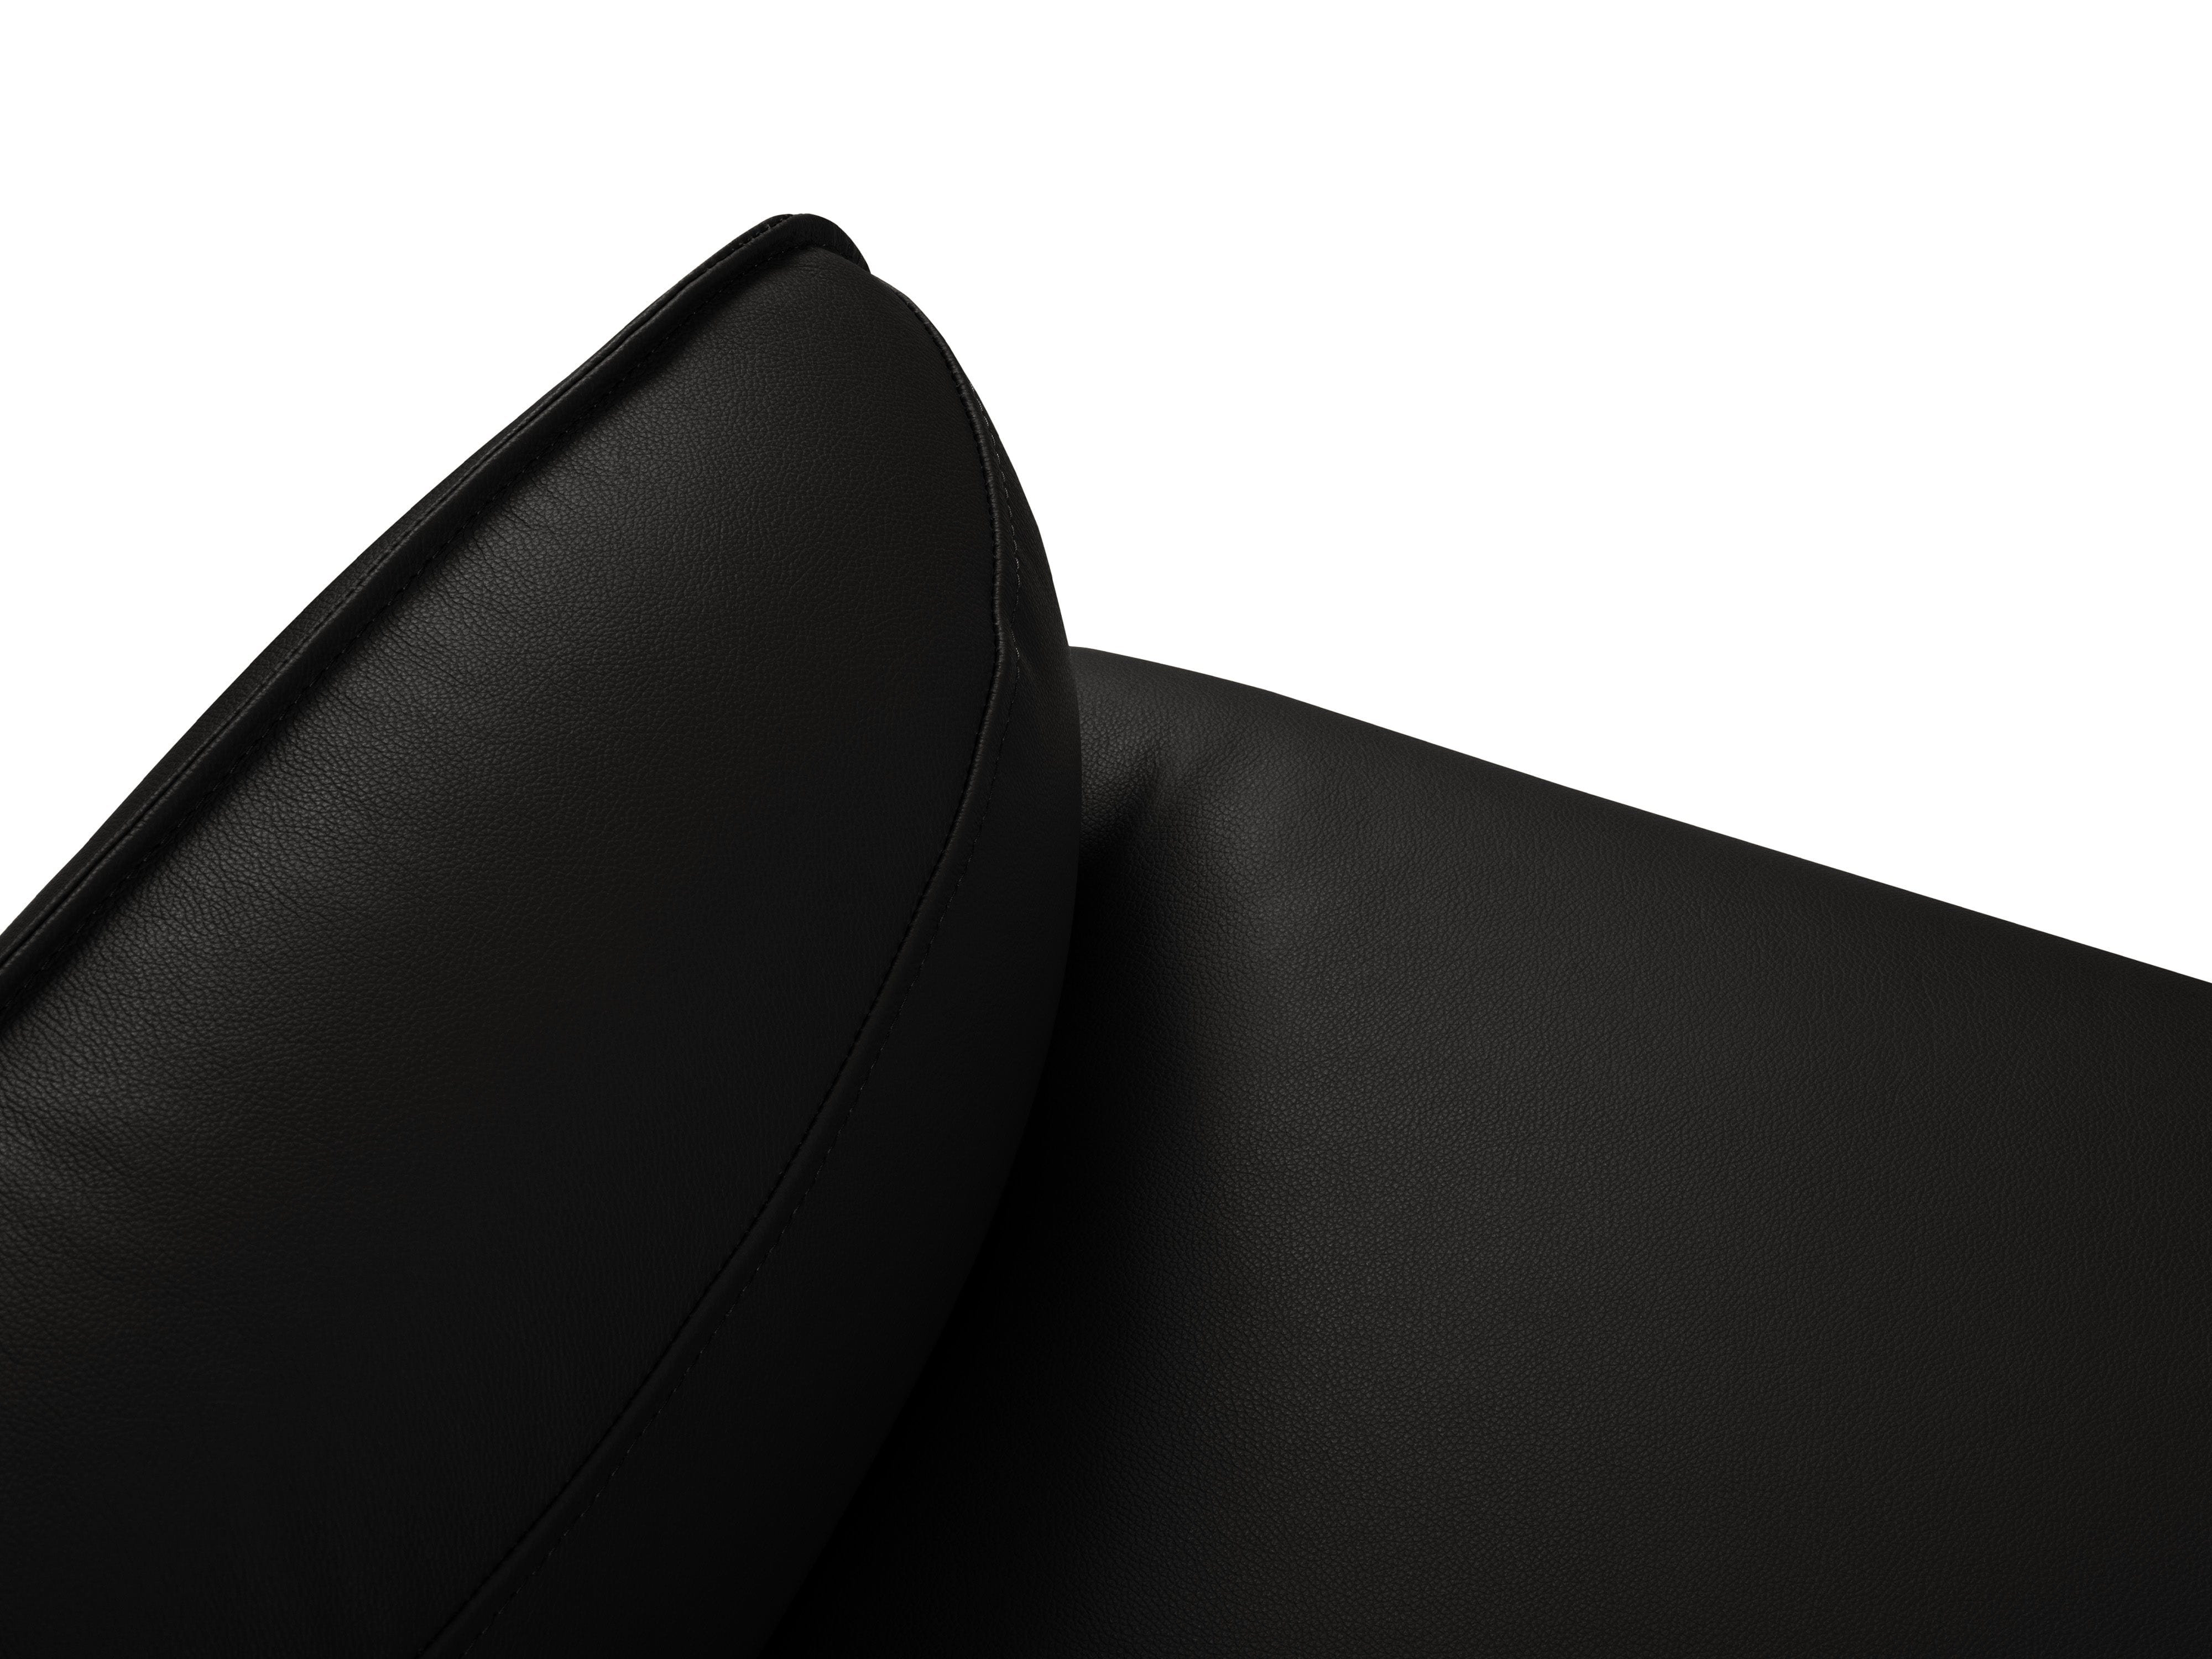 Genuine Leather Sofa, "Neso", 2 Seats, 175x90x76
 ,Black,Black Metal, Windsor & Co, Eye on Design